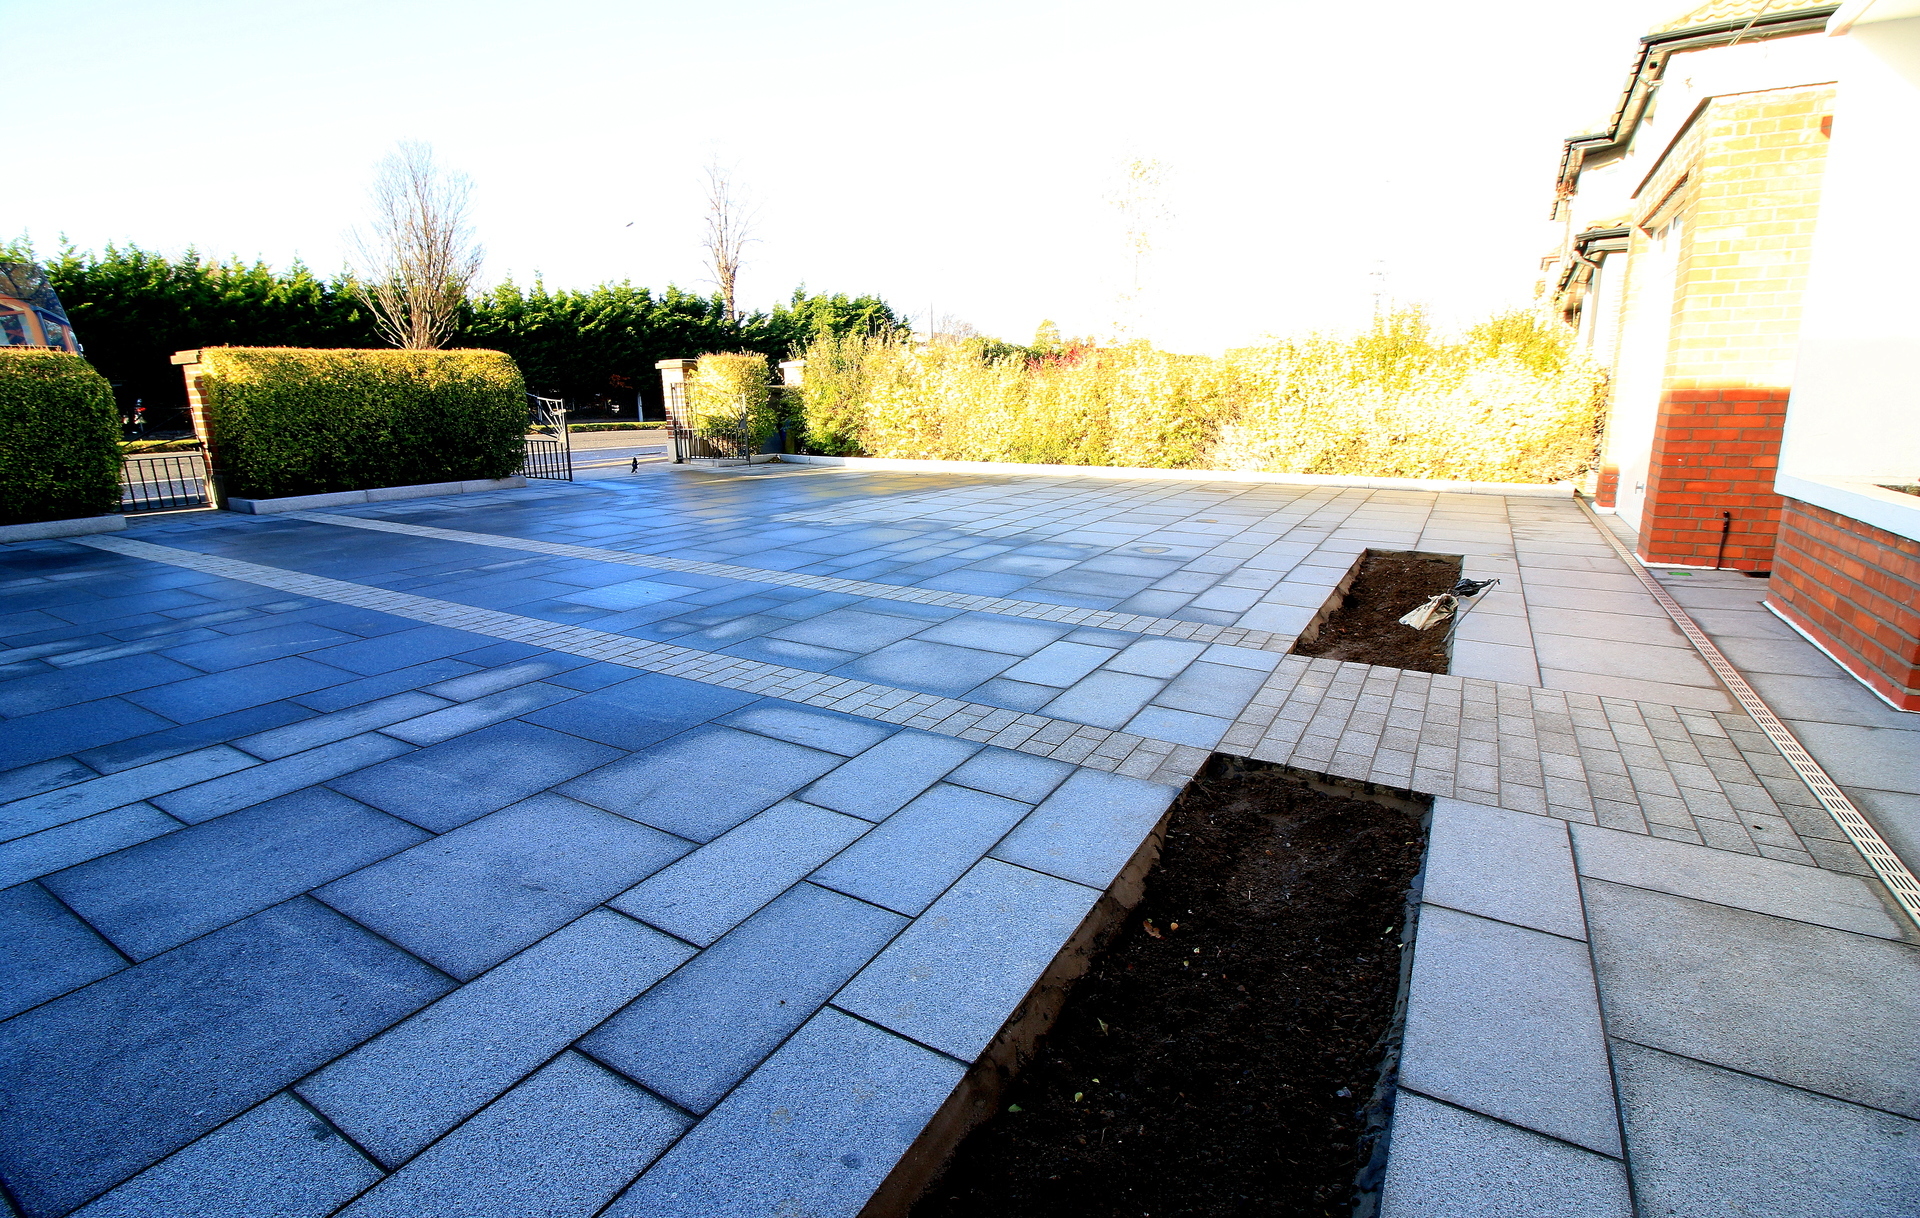 Driveway Design & Landscaping in Donnybrook, Dublin 4 in natural Granite paving I Owen Chubb Garden Designers & Landscapers